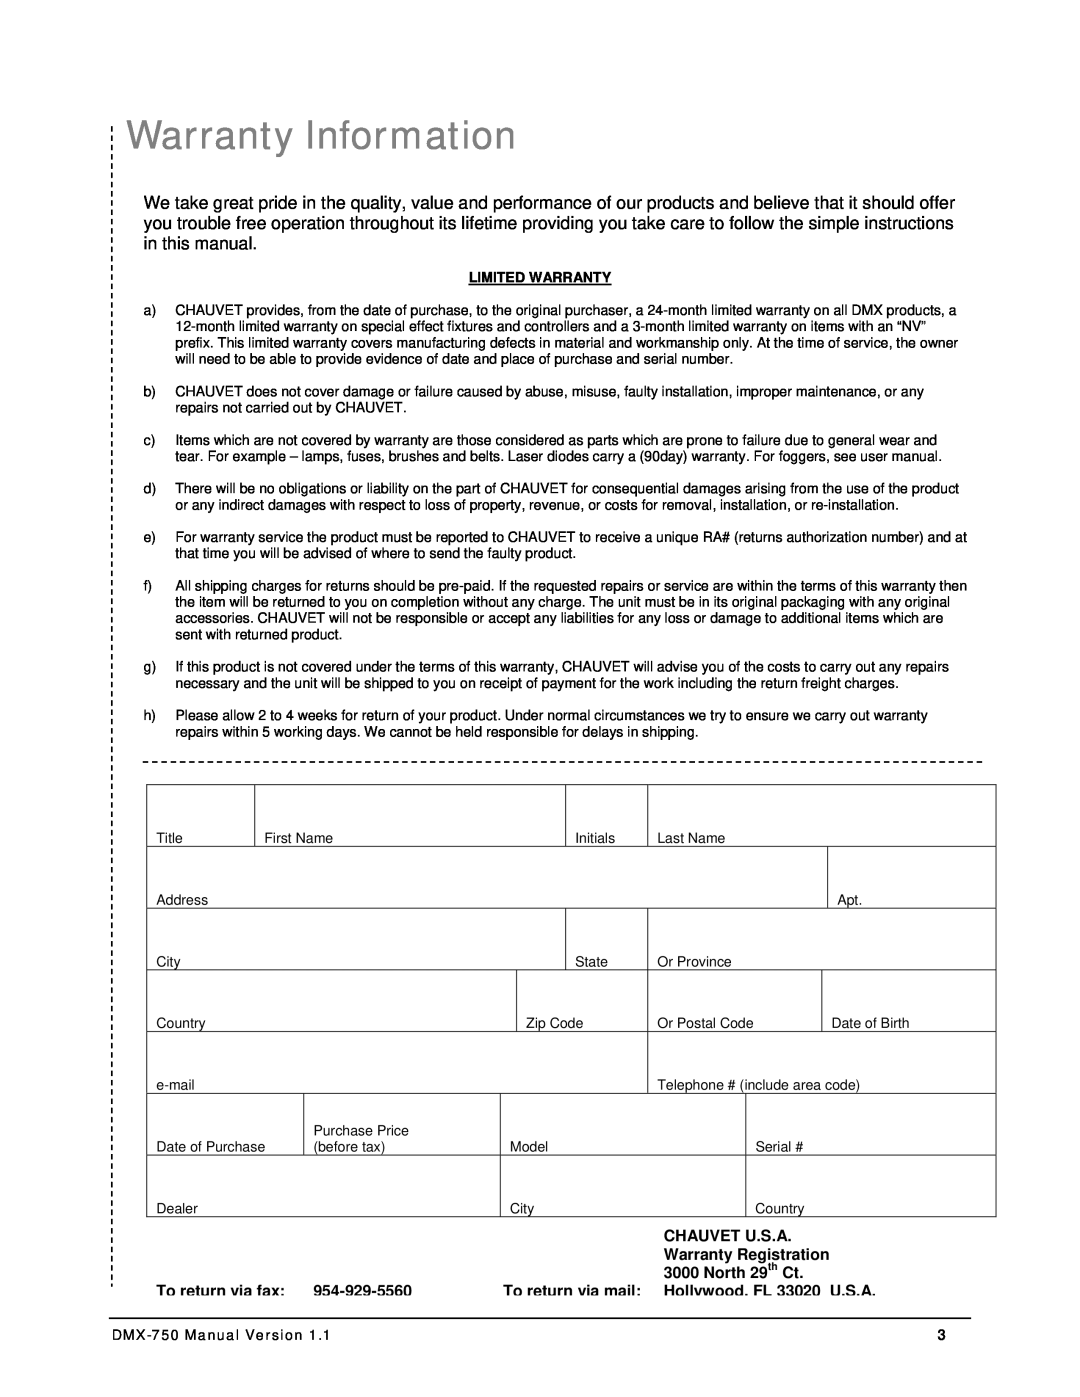 Chauvet DMX-750 manual Warranty Information, Chauvet U.S.A, Warranty Registration, North 29th Ct, To return via fax 